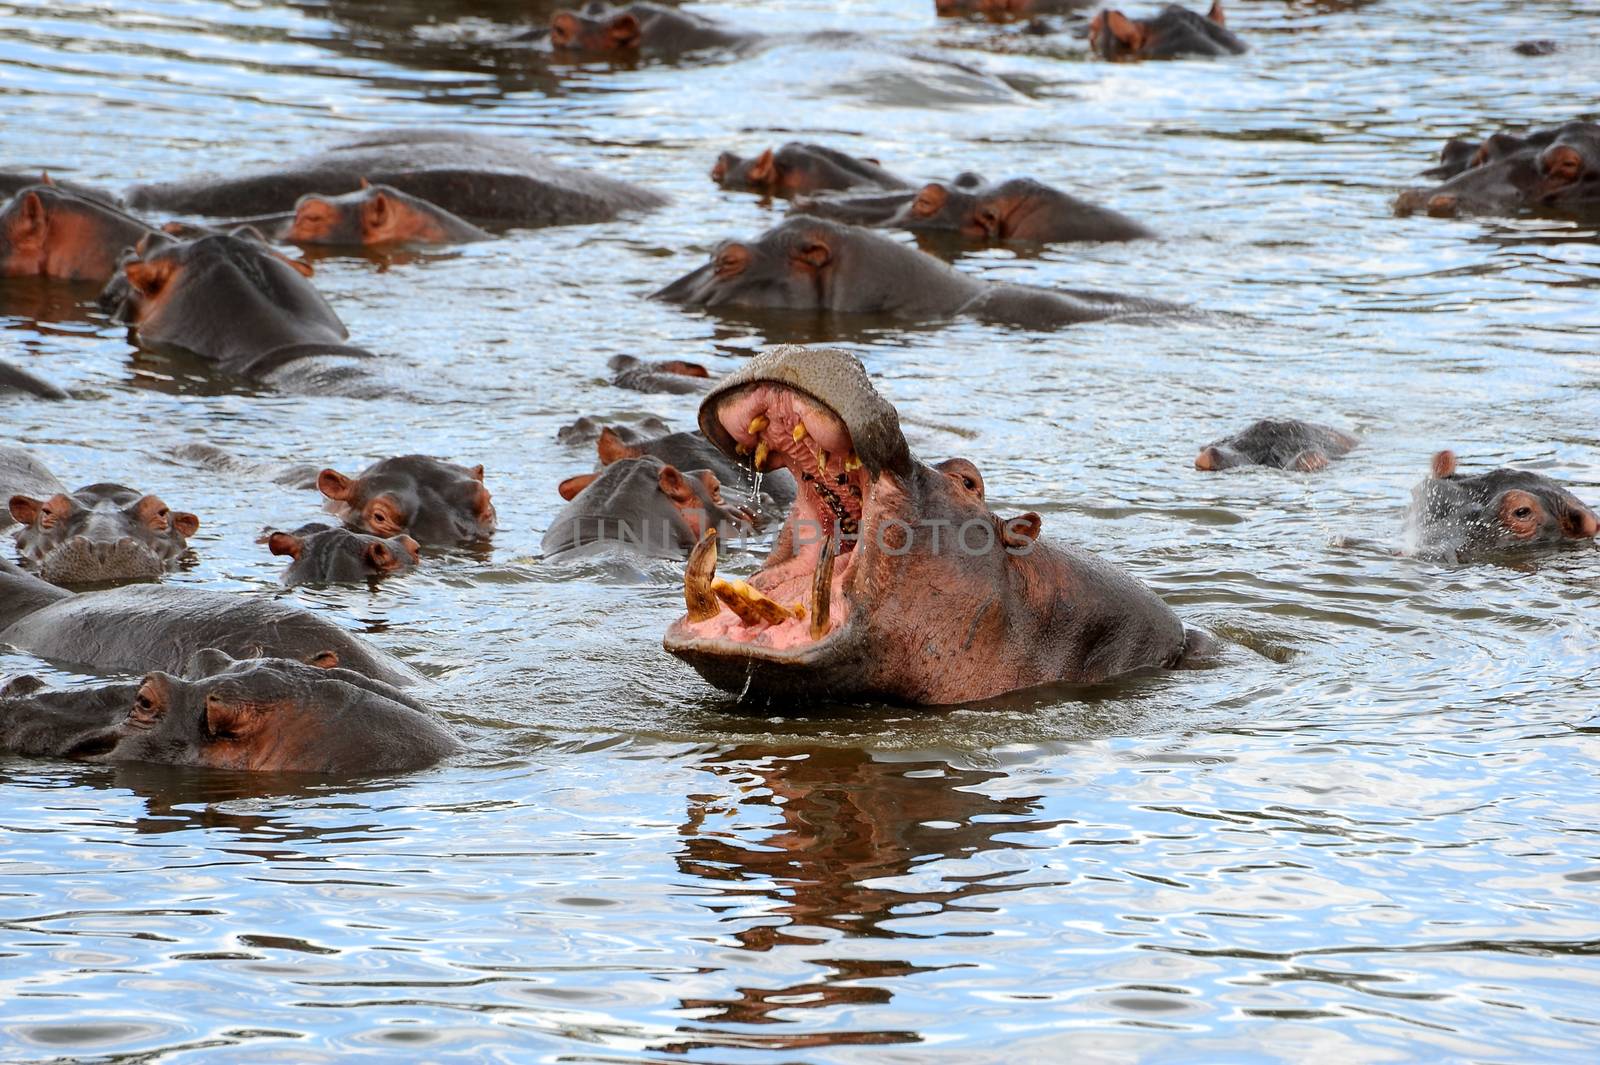 hippo in national park Tanzania by moizhusein